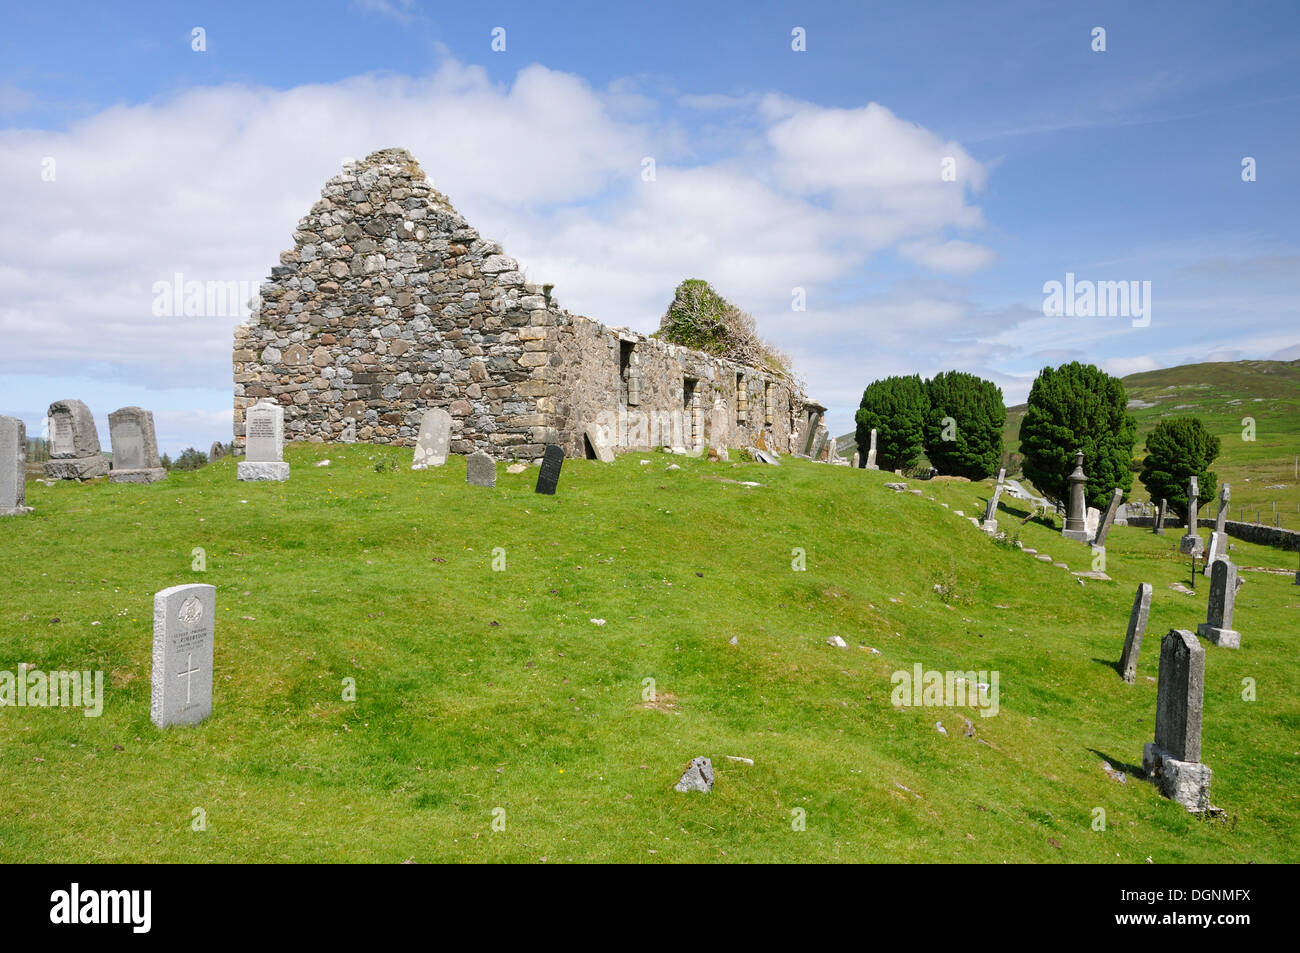 Antigua iglesia en ruinas con un cementerio aledaño, Schottland, Isla de Skye, Escocia, Reino Unido Foto de stock